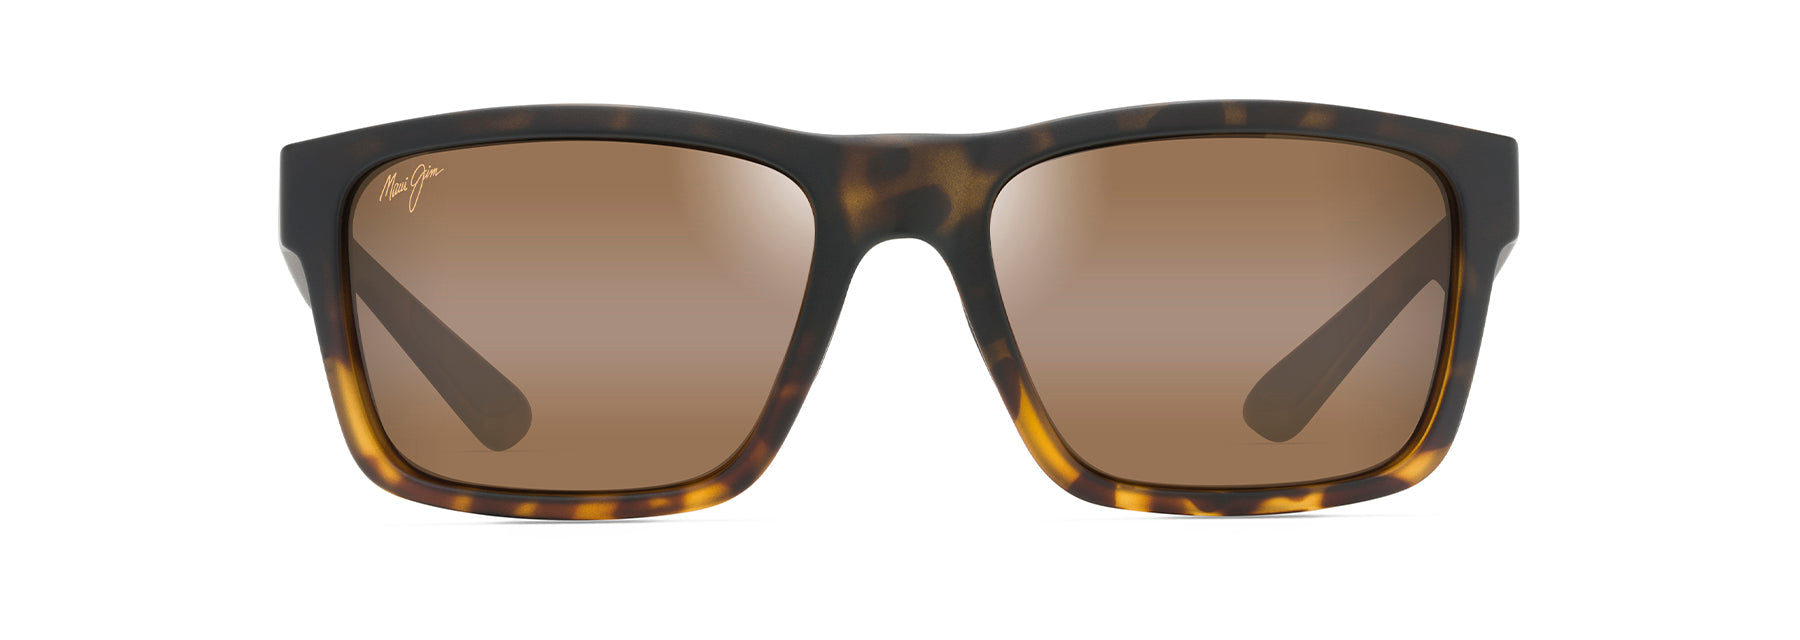 Maui Jim The Flats Sunglasses